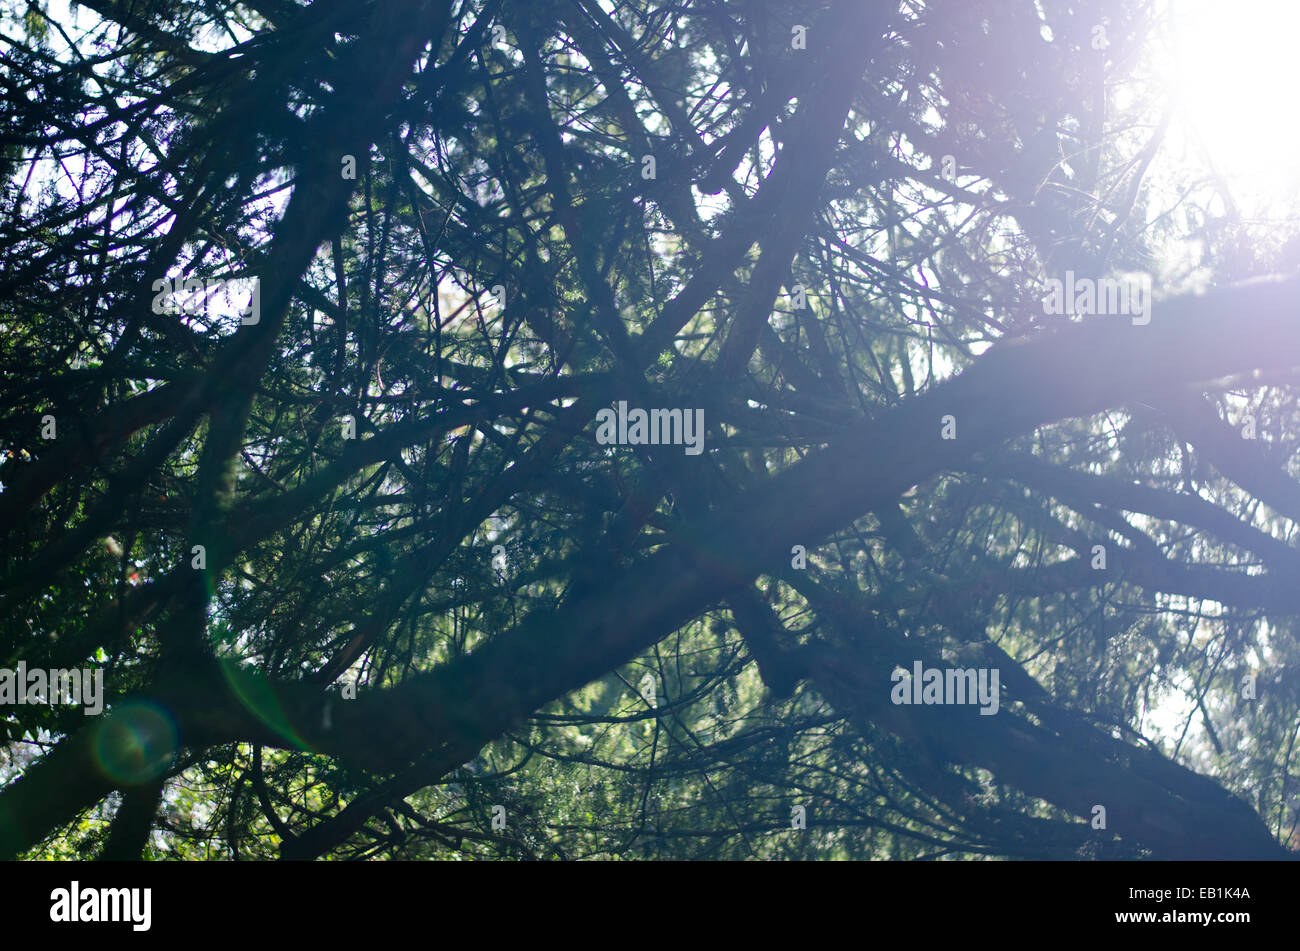 Sunlight through tree branches, dappled light outdoors Stock Photo